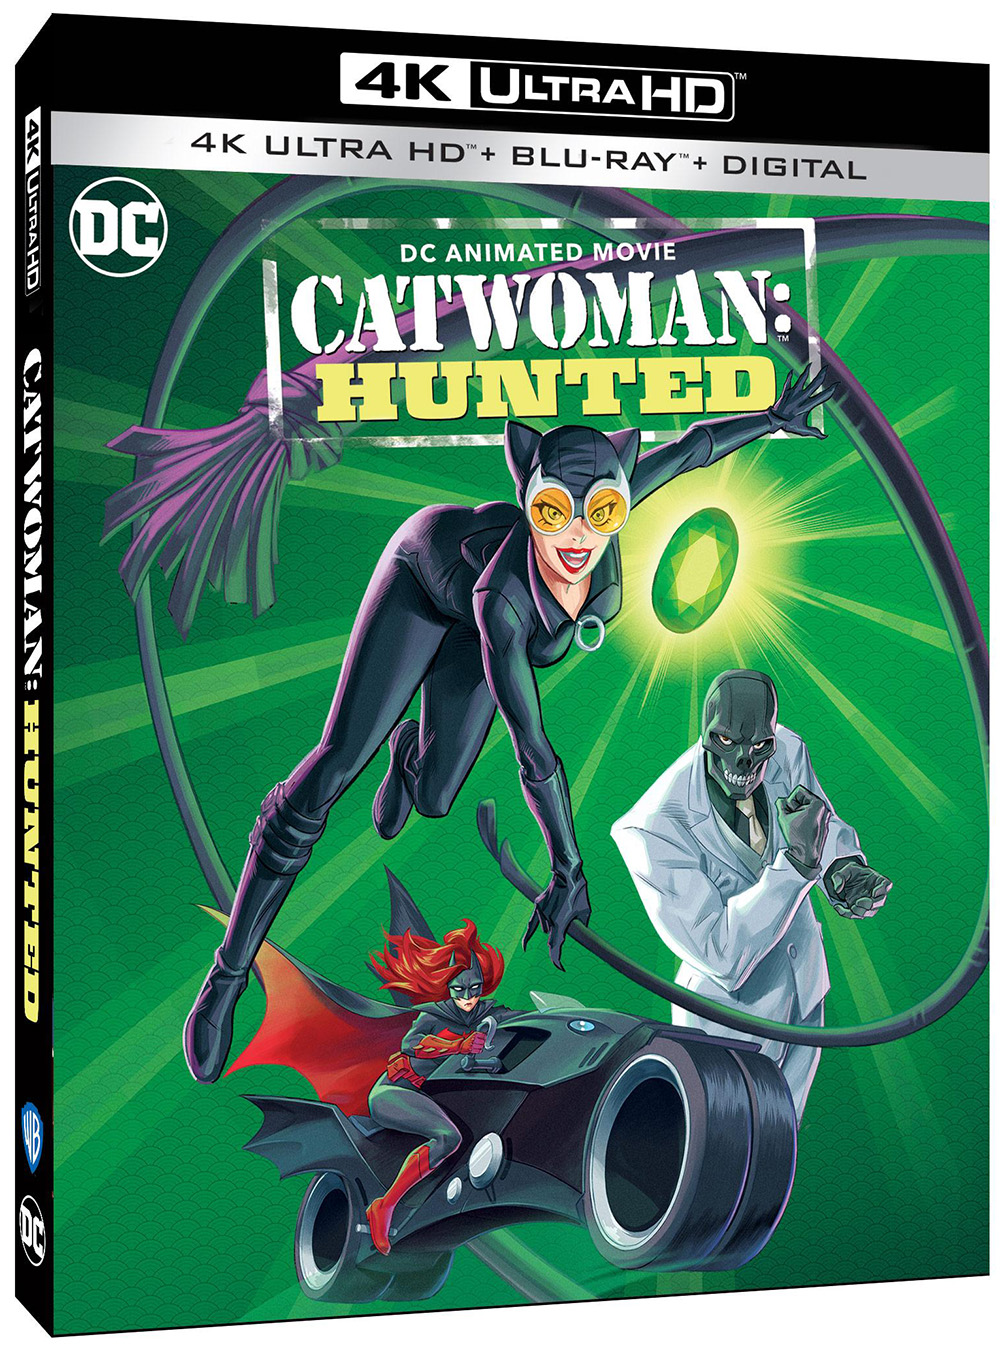 DC Comics' CATWOMAN: HUNTED